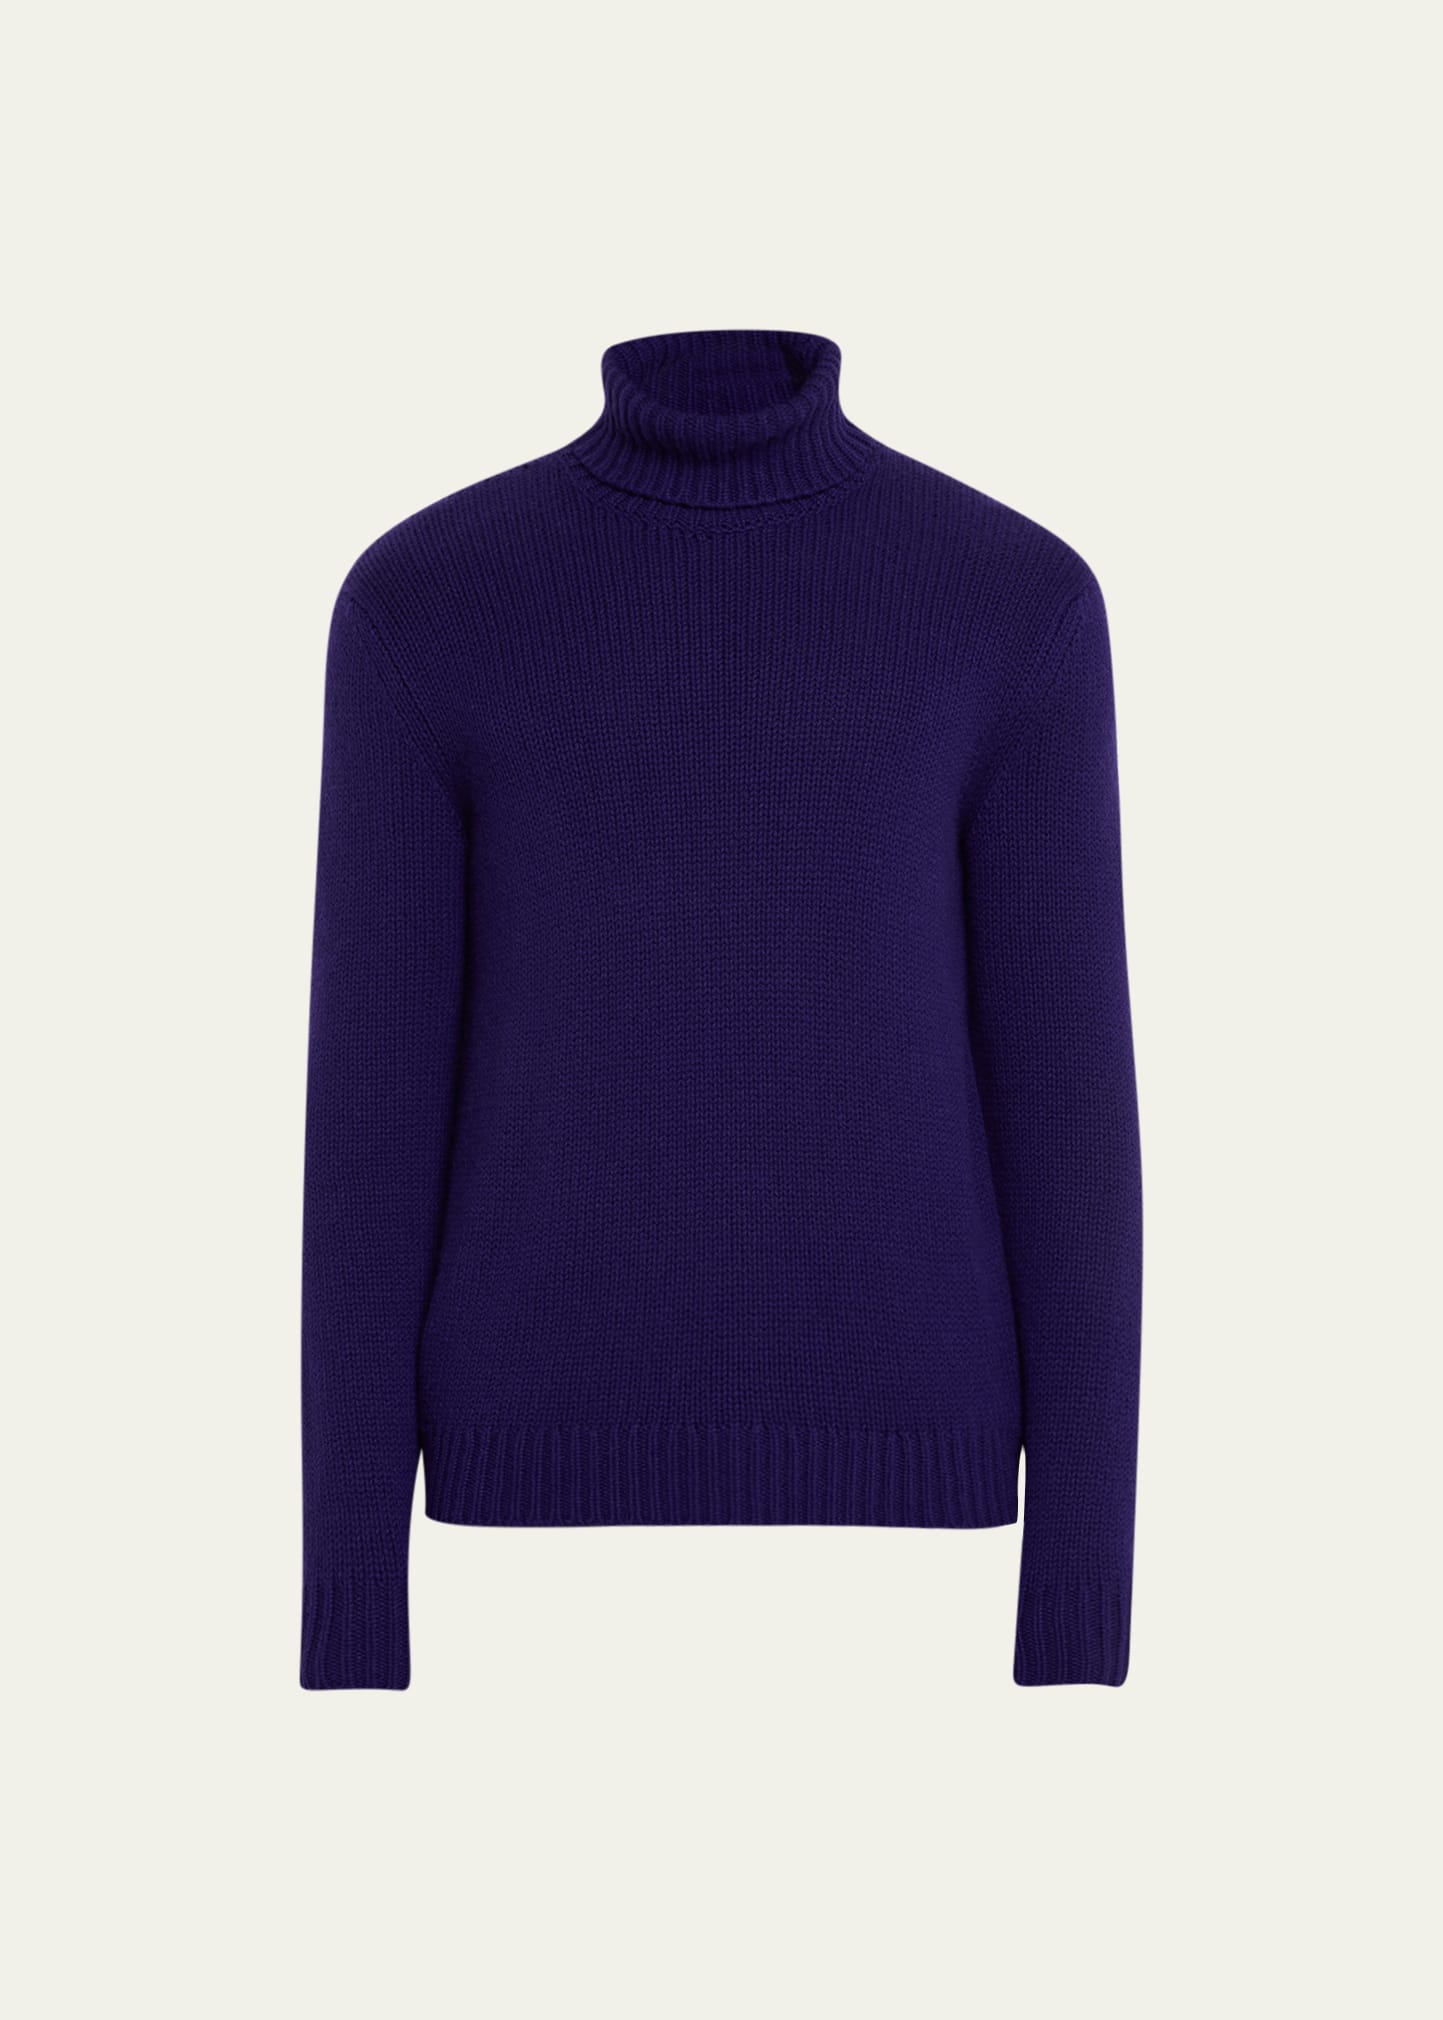 Ralph Lauren Purple Label Men's Cashmere Turtleneck Sweater